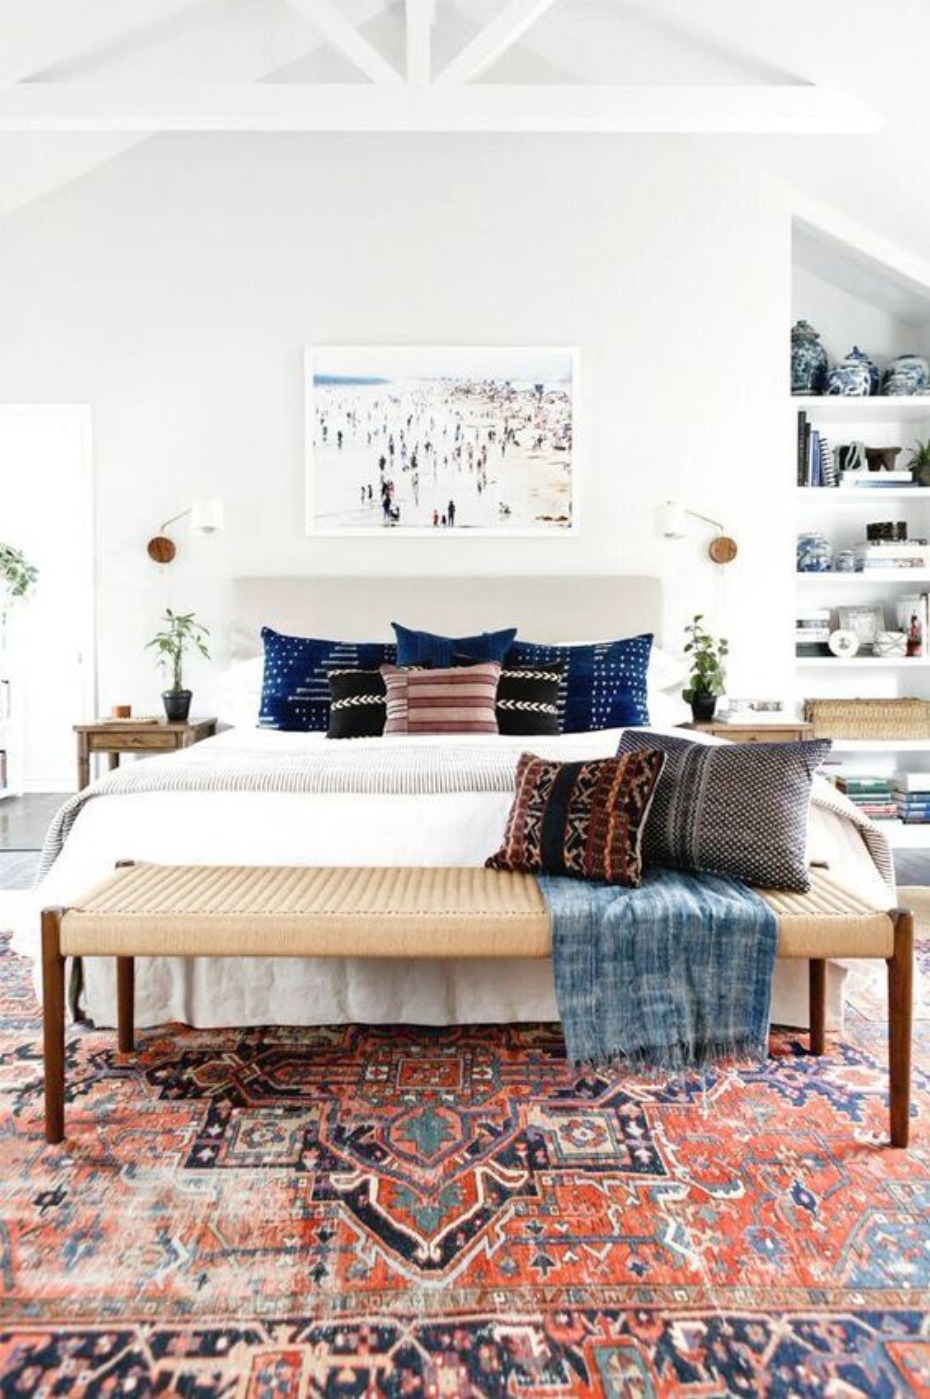 hipster inspired bedroom idea